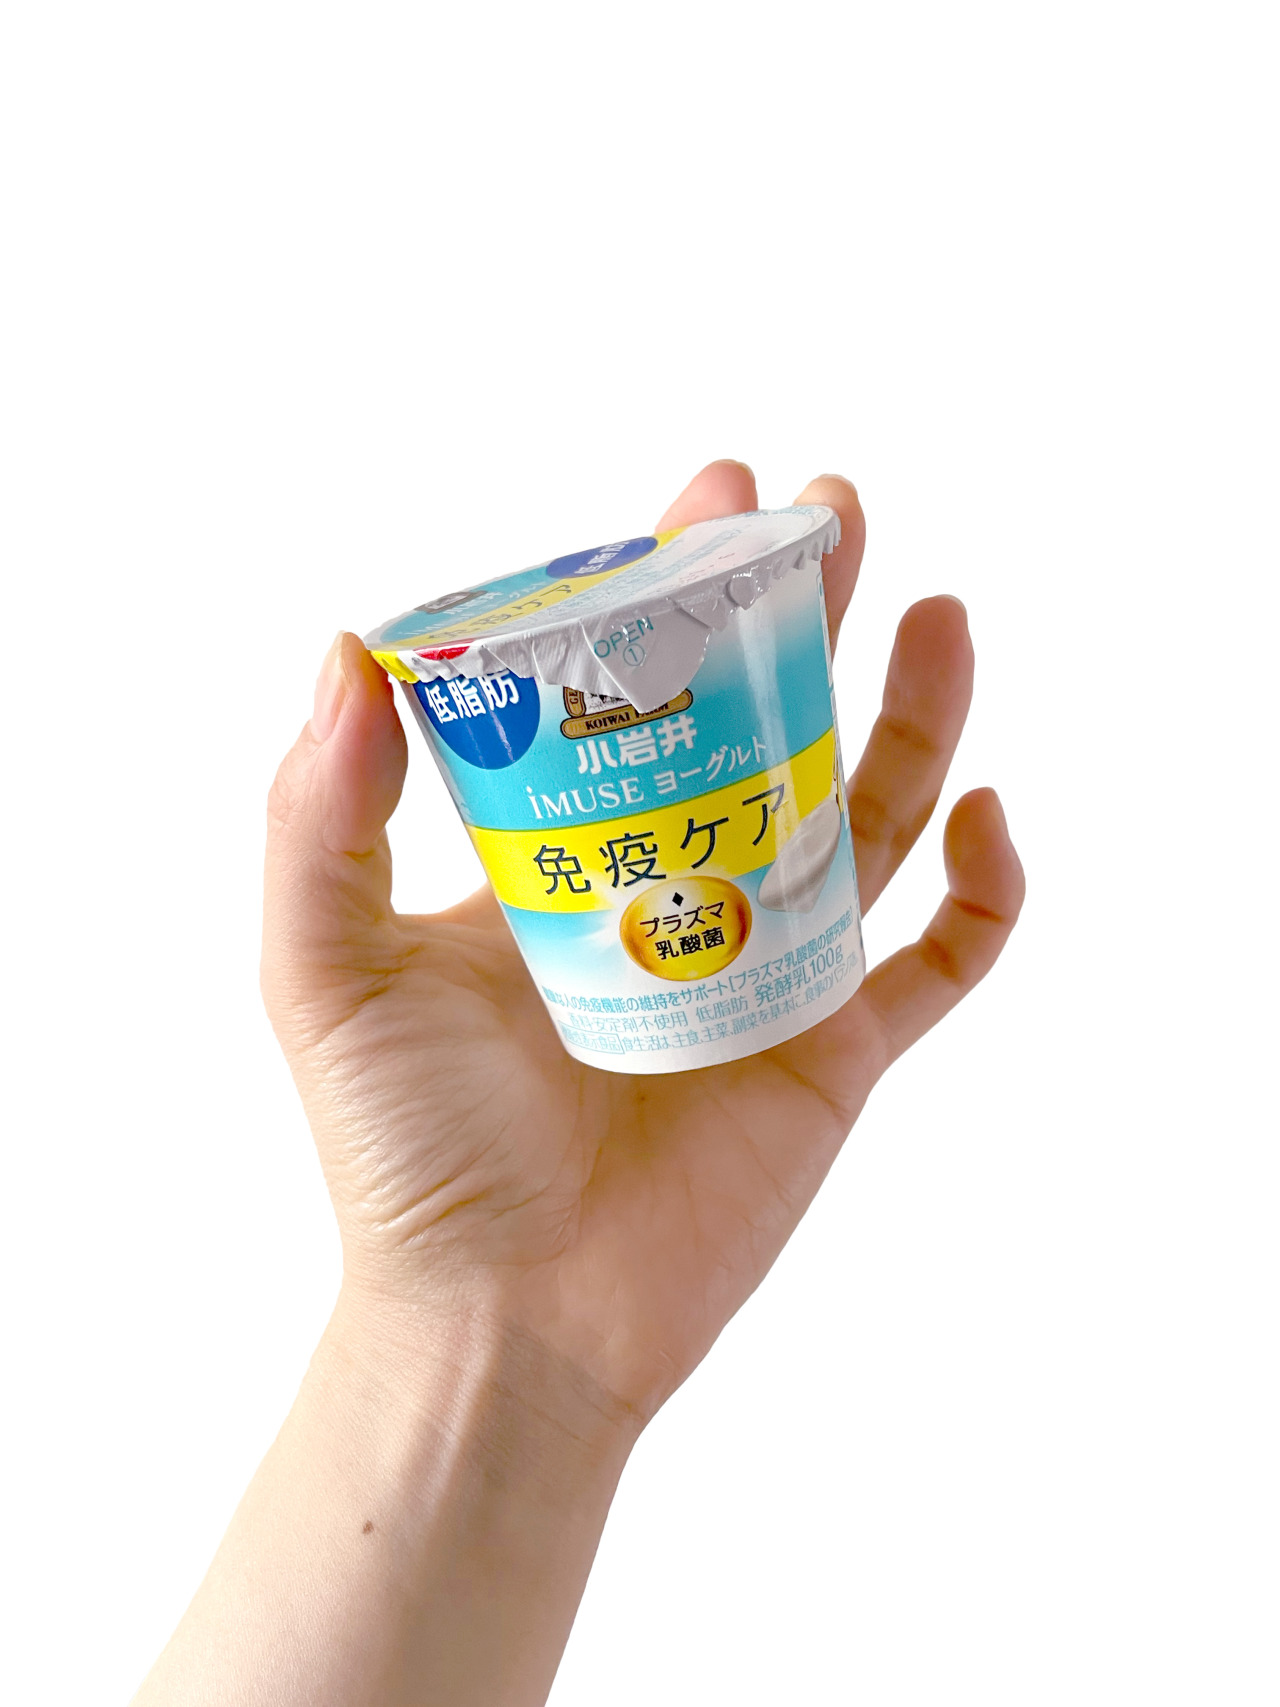 Yoghurt 小岩井 Imuse ヨーグルト 低脂肪 9 28 Imuseのヨーグルトから低脂肪タイプが新発売